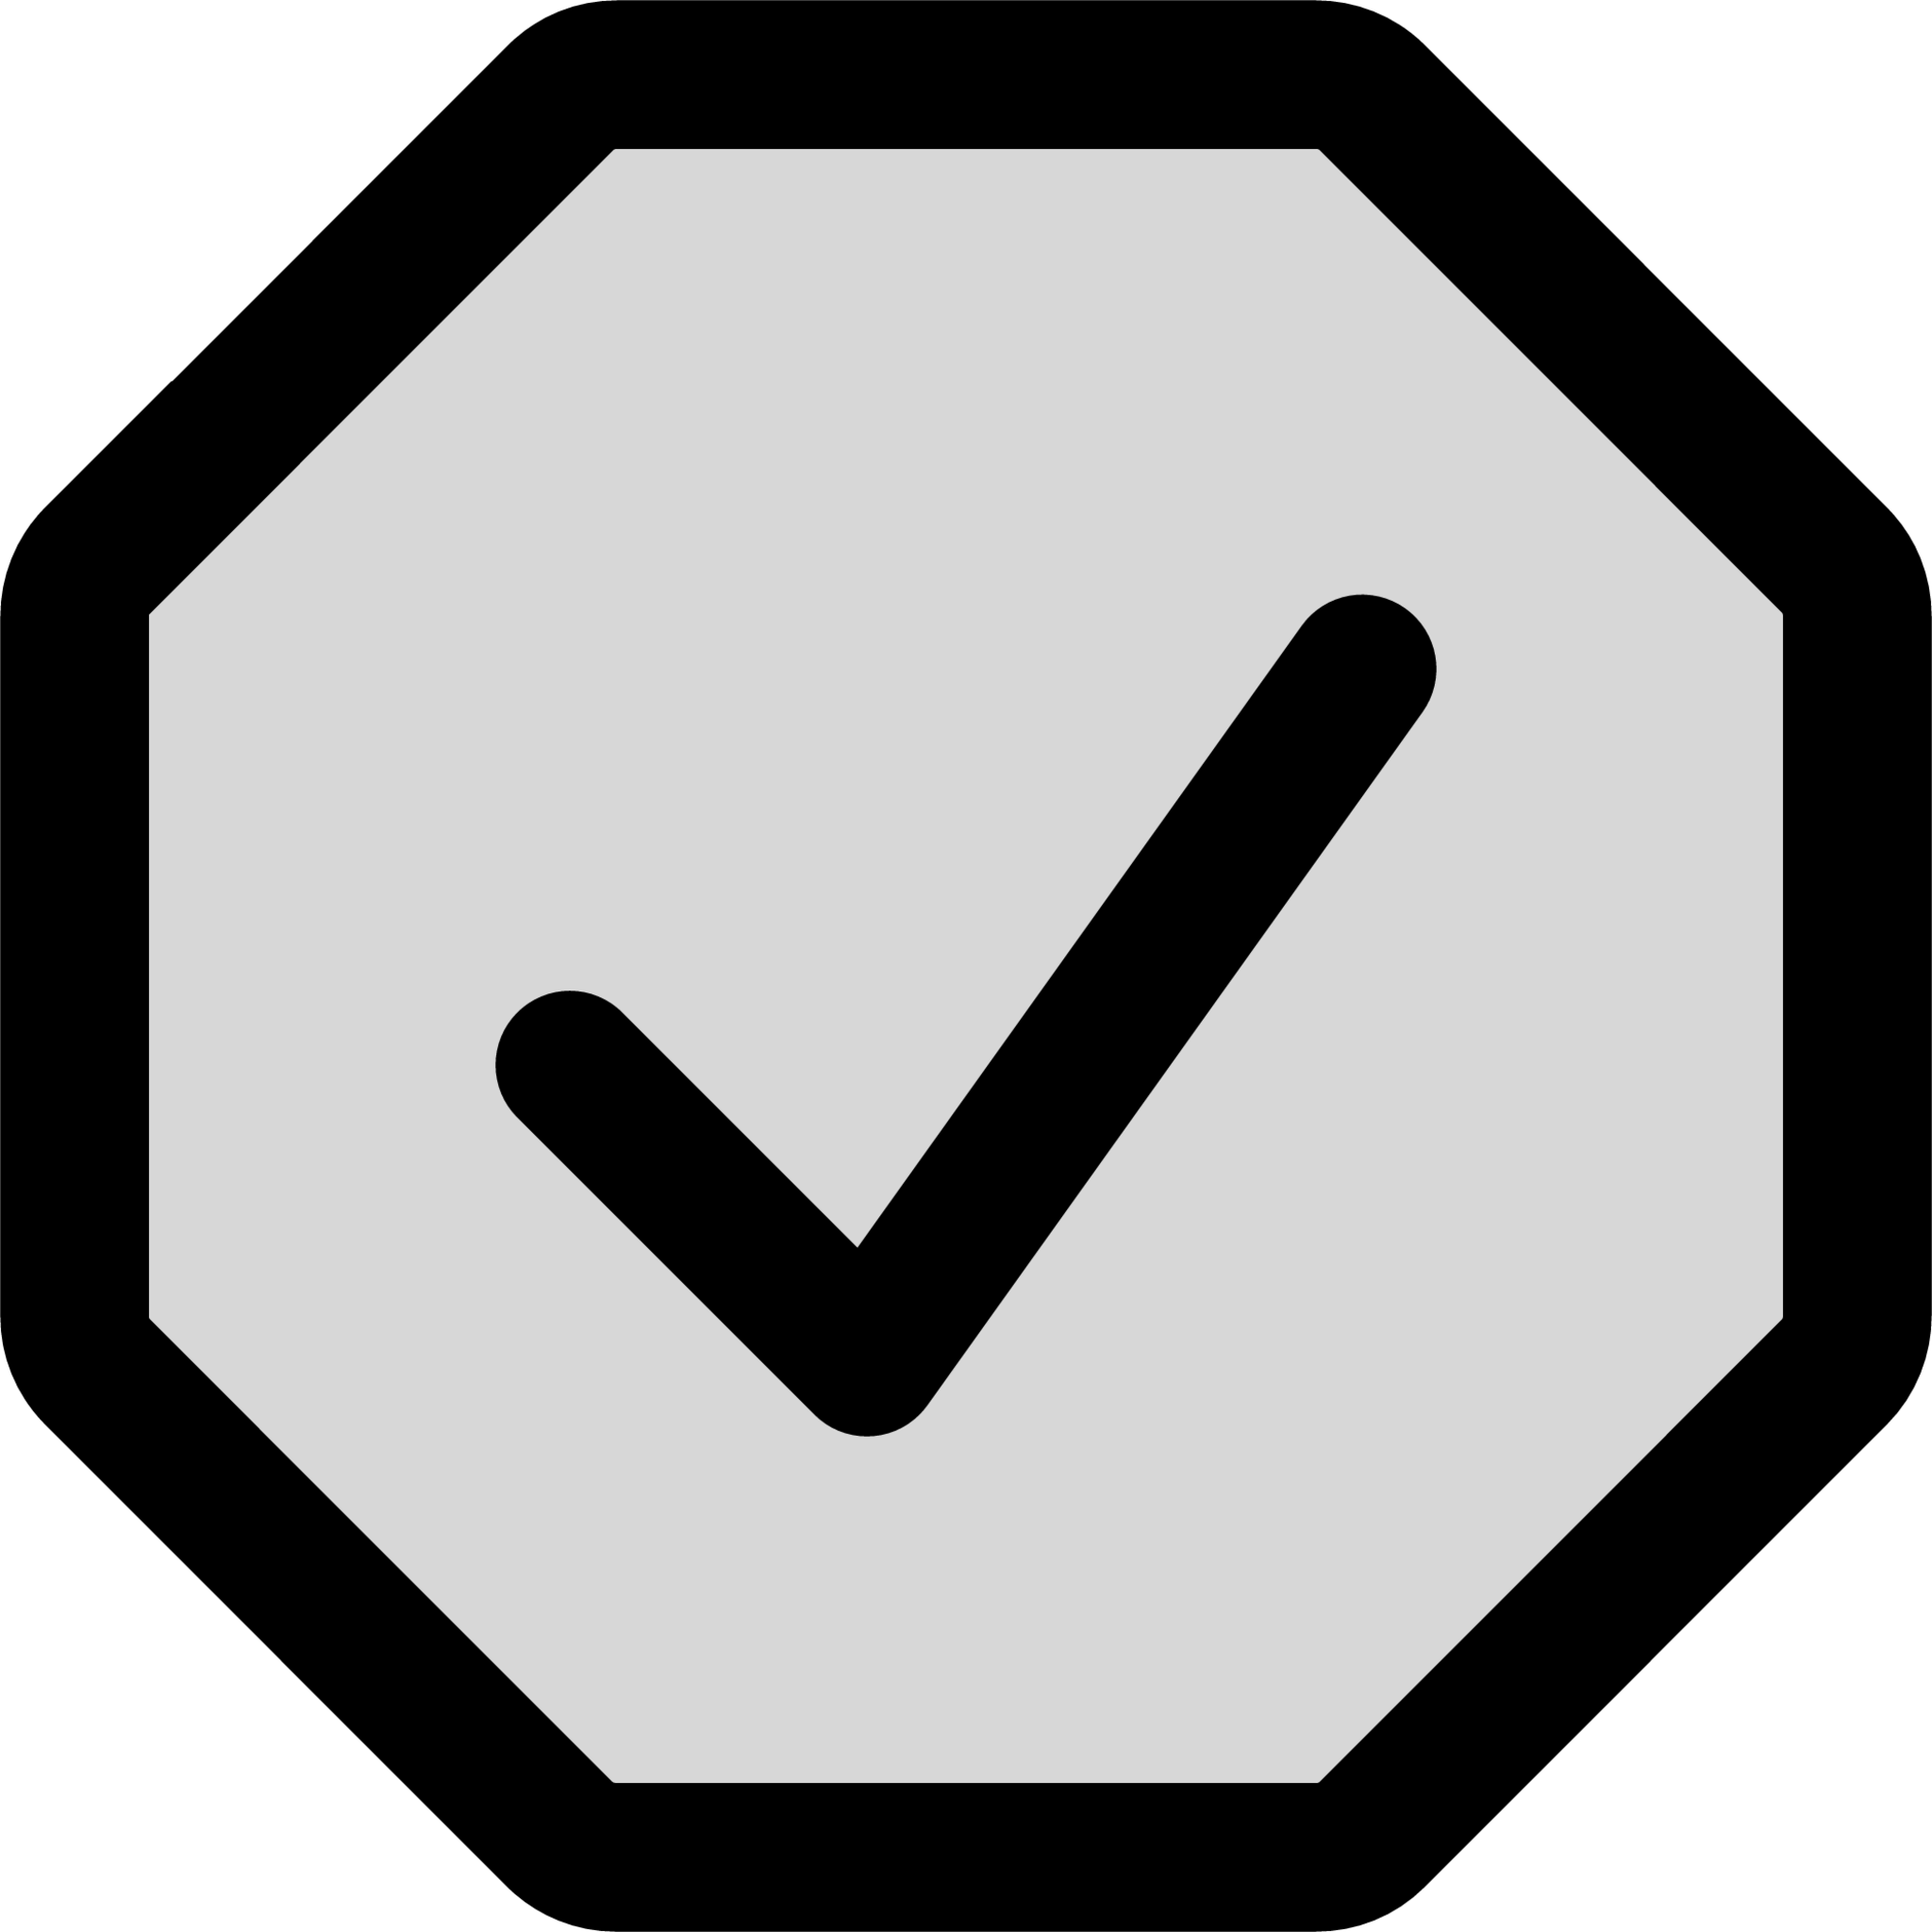 Octagon check (duotone) icon